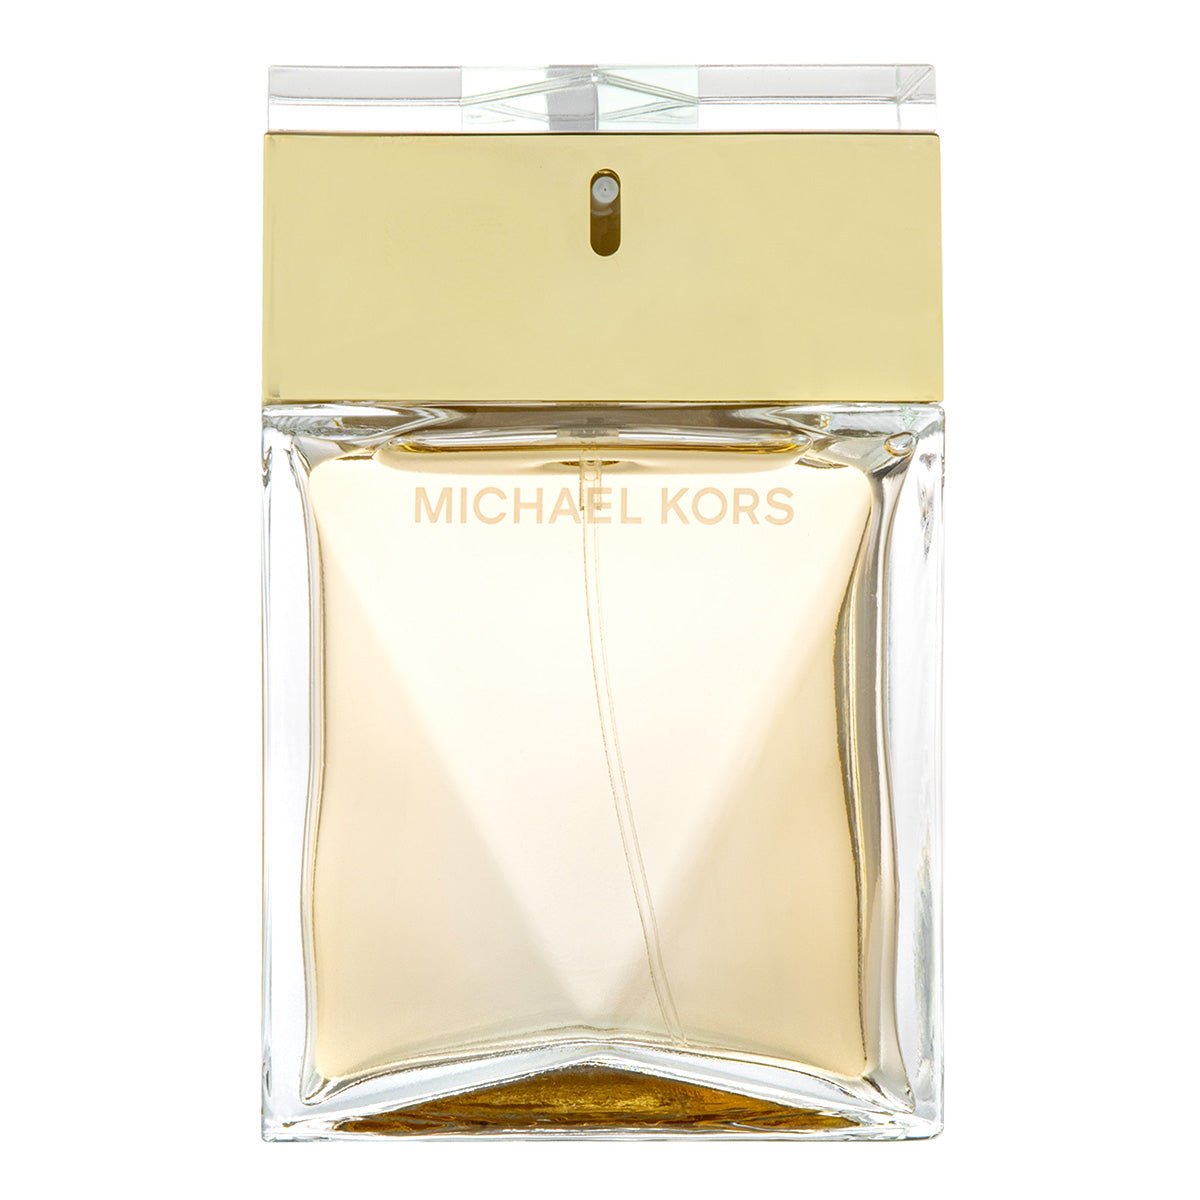 Michael Kors Gold Luxe Edition Eau De Parfum Spray Refillable Atomiser 10ml - LookincredibleMichael Kors22548310847